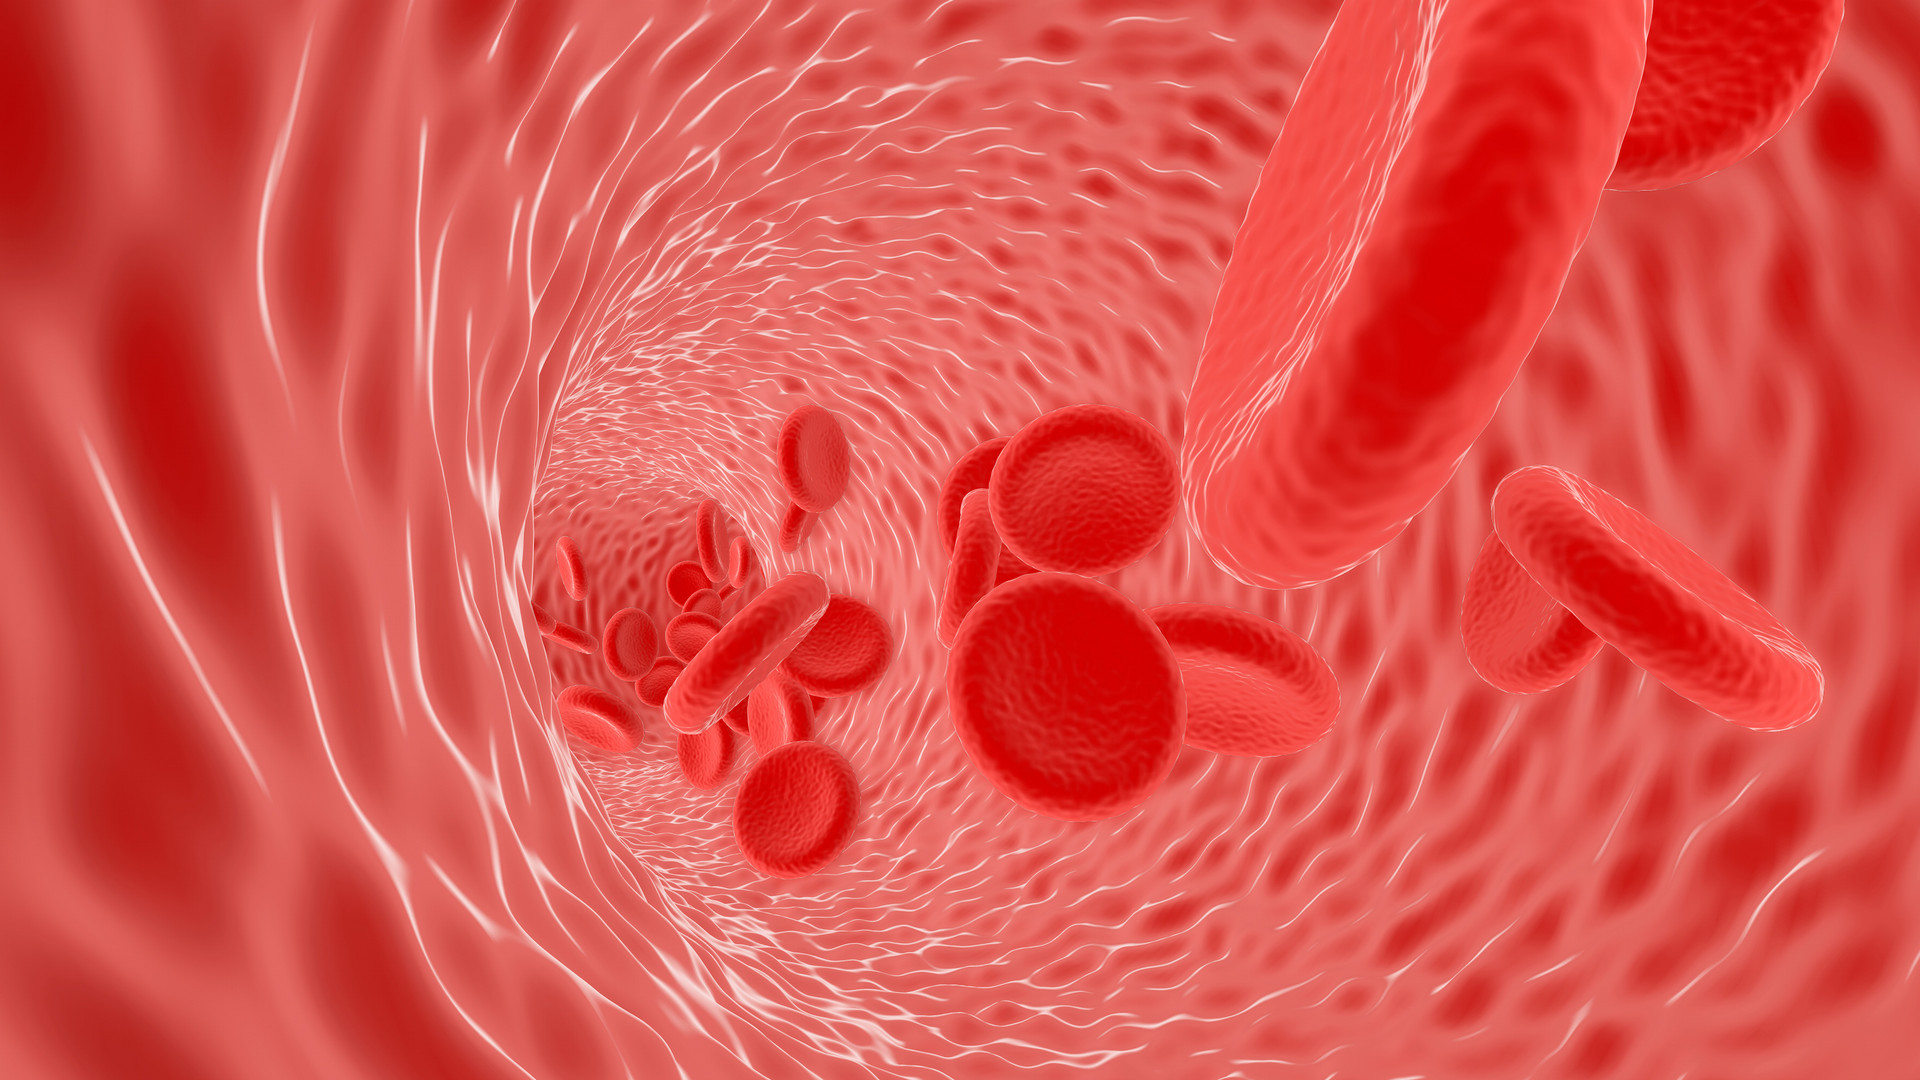 Am <font color="red">J</font> Sports <font color="red">Med</font>：富含血小板的血浆无论是否含有白细胞都不会影响治疗膝关节骨性关节炎的疗效